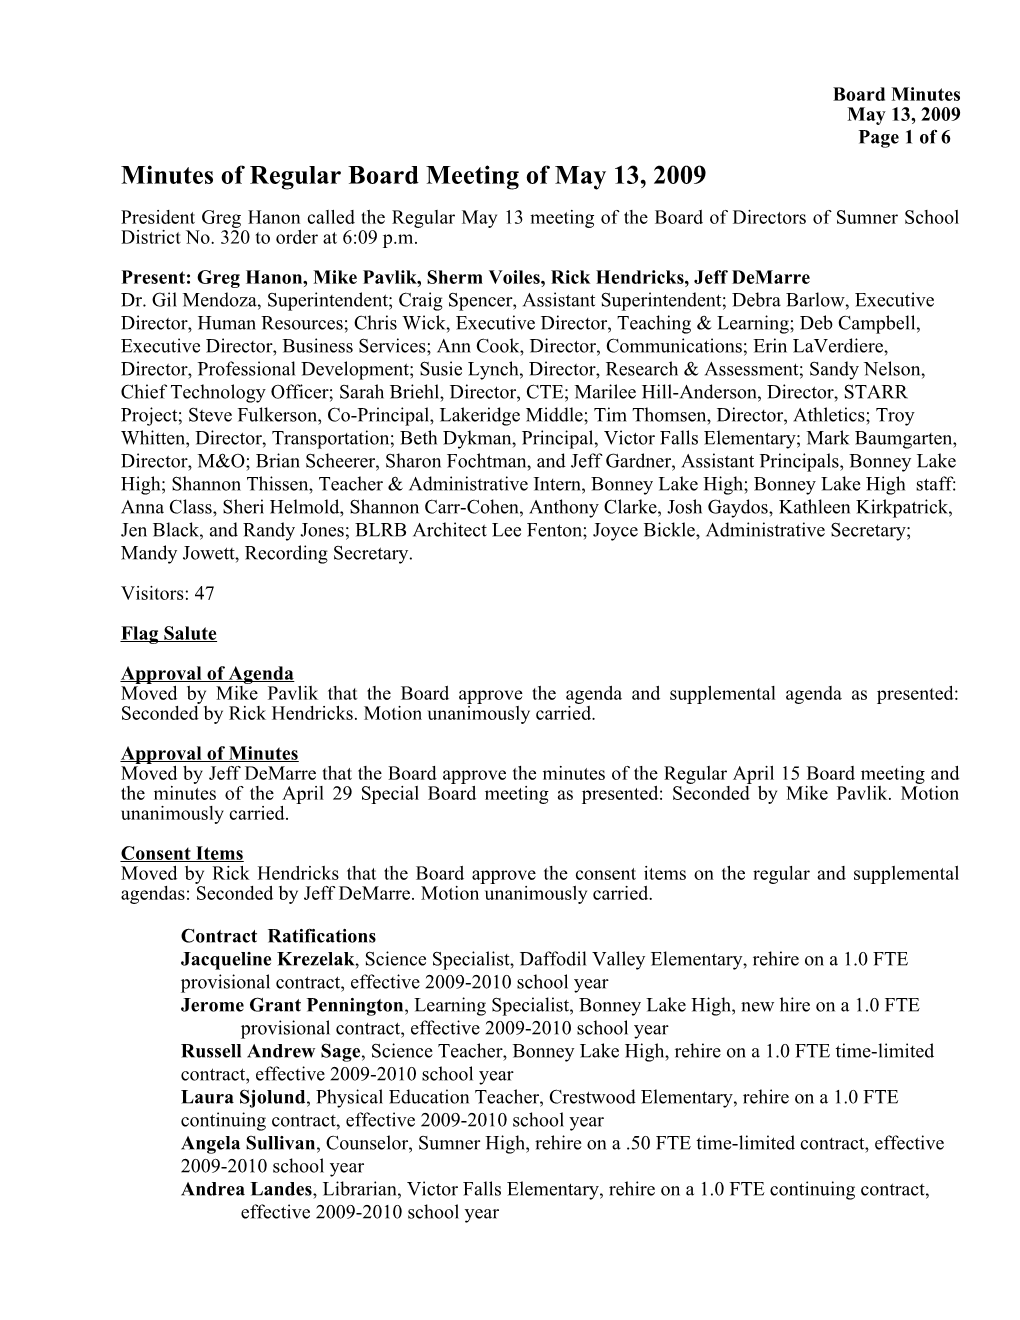 Minutes of Regular Board Meeting of May 13, 2009